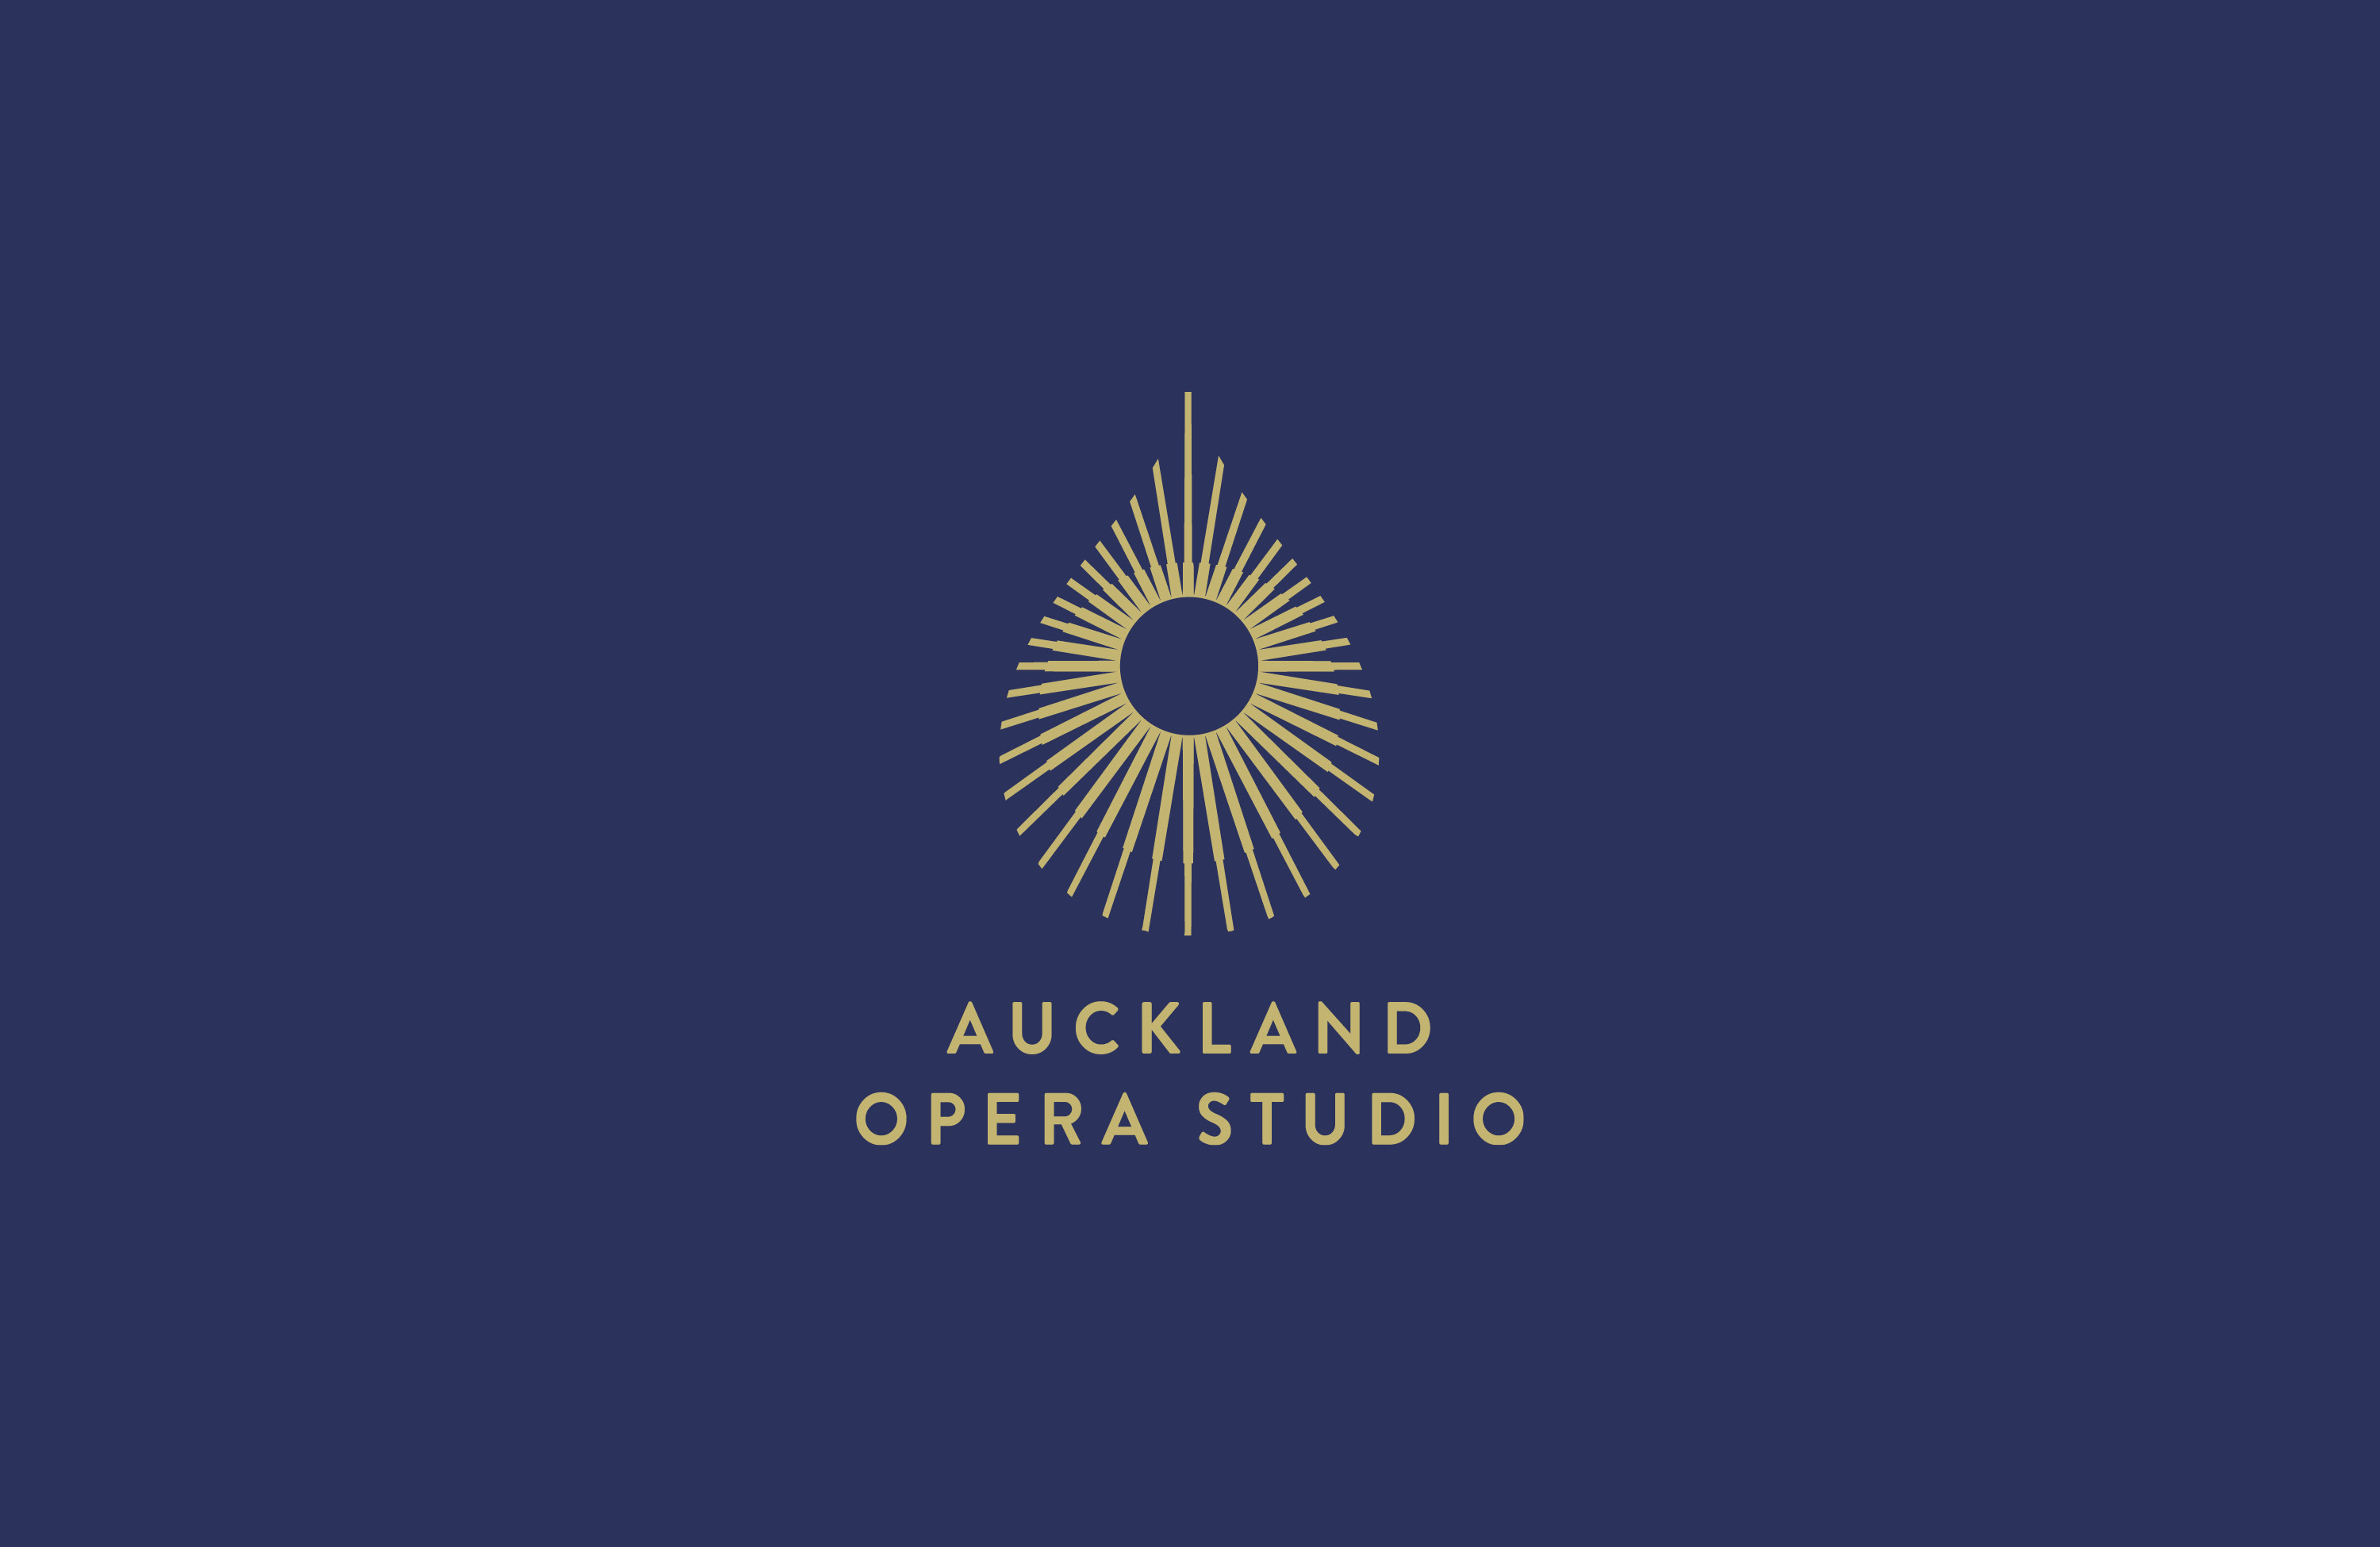 Emily Picot Design Rebrands the Auckland Opera Studio